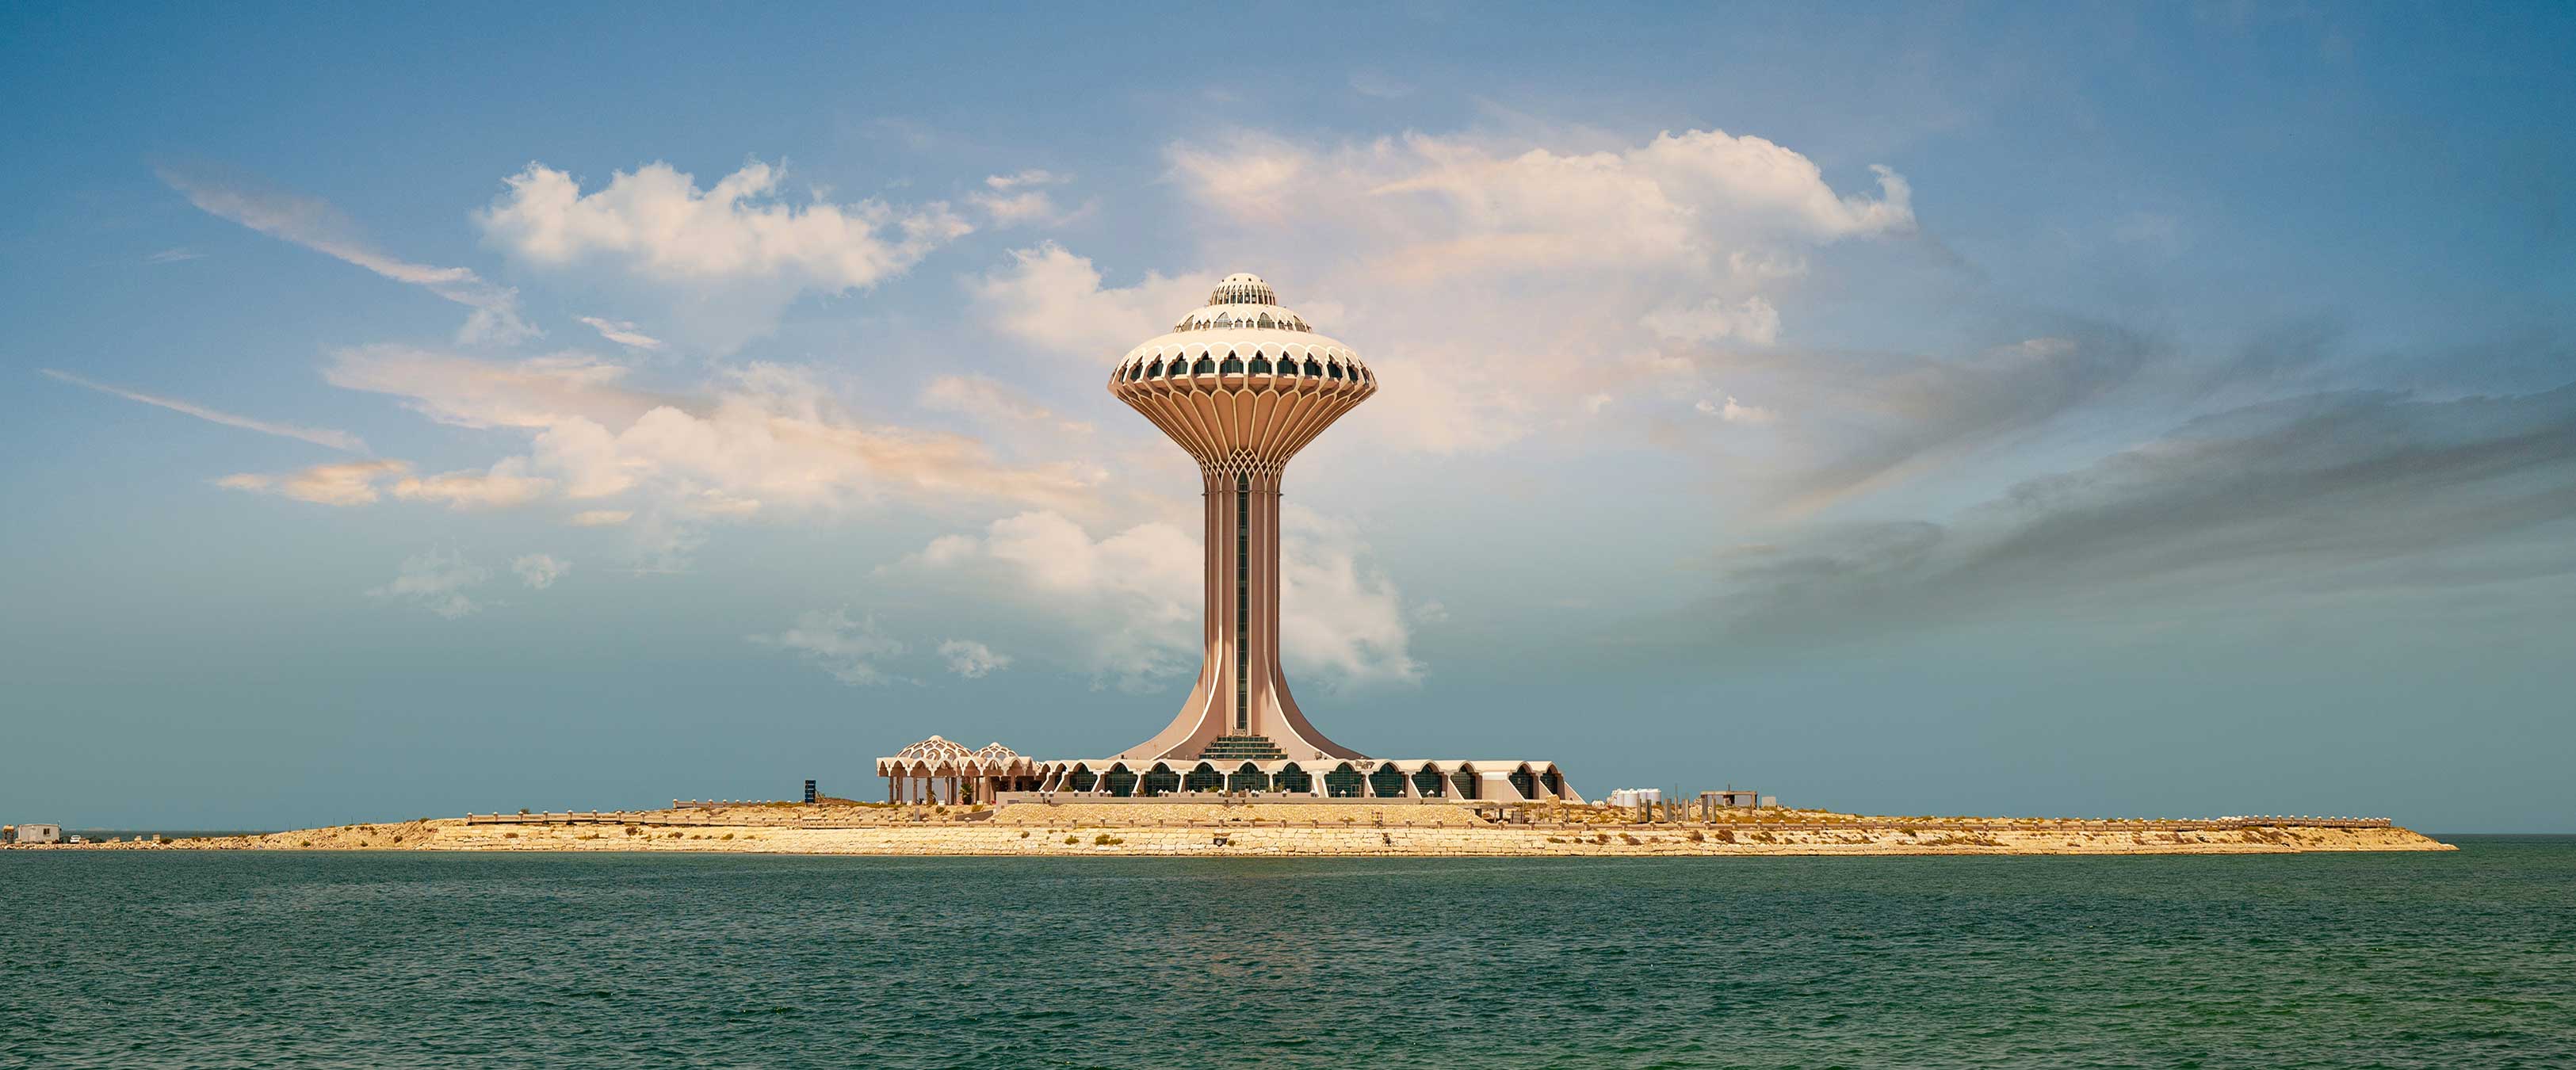 Al Kohbar water tower